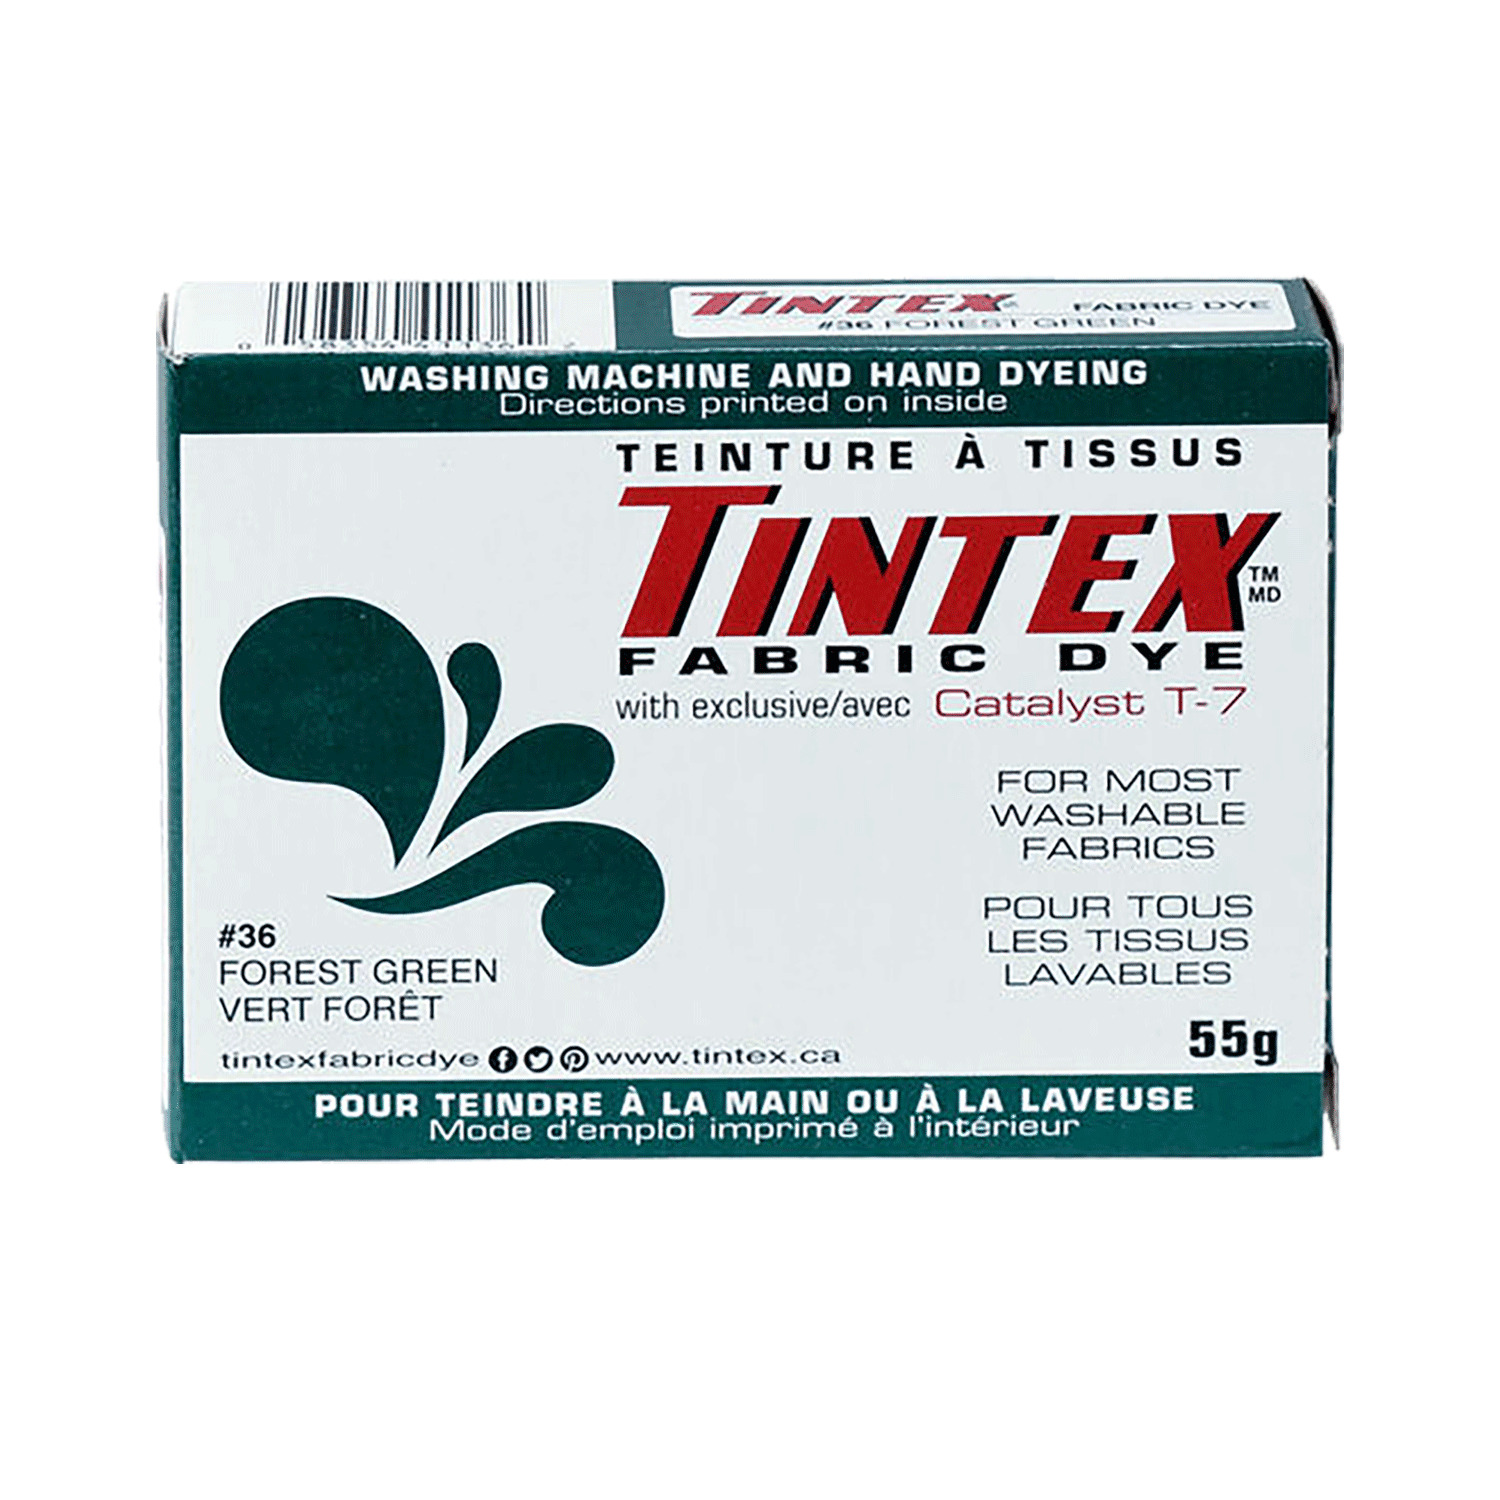 Tintex - All purpose fabric dye - #36 Forest green